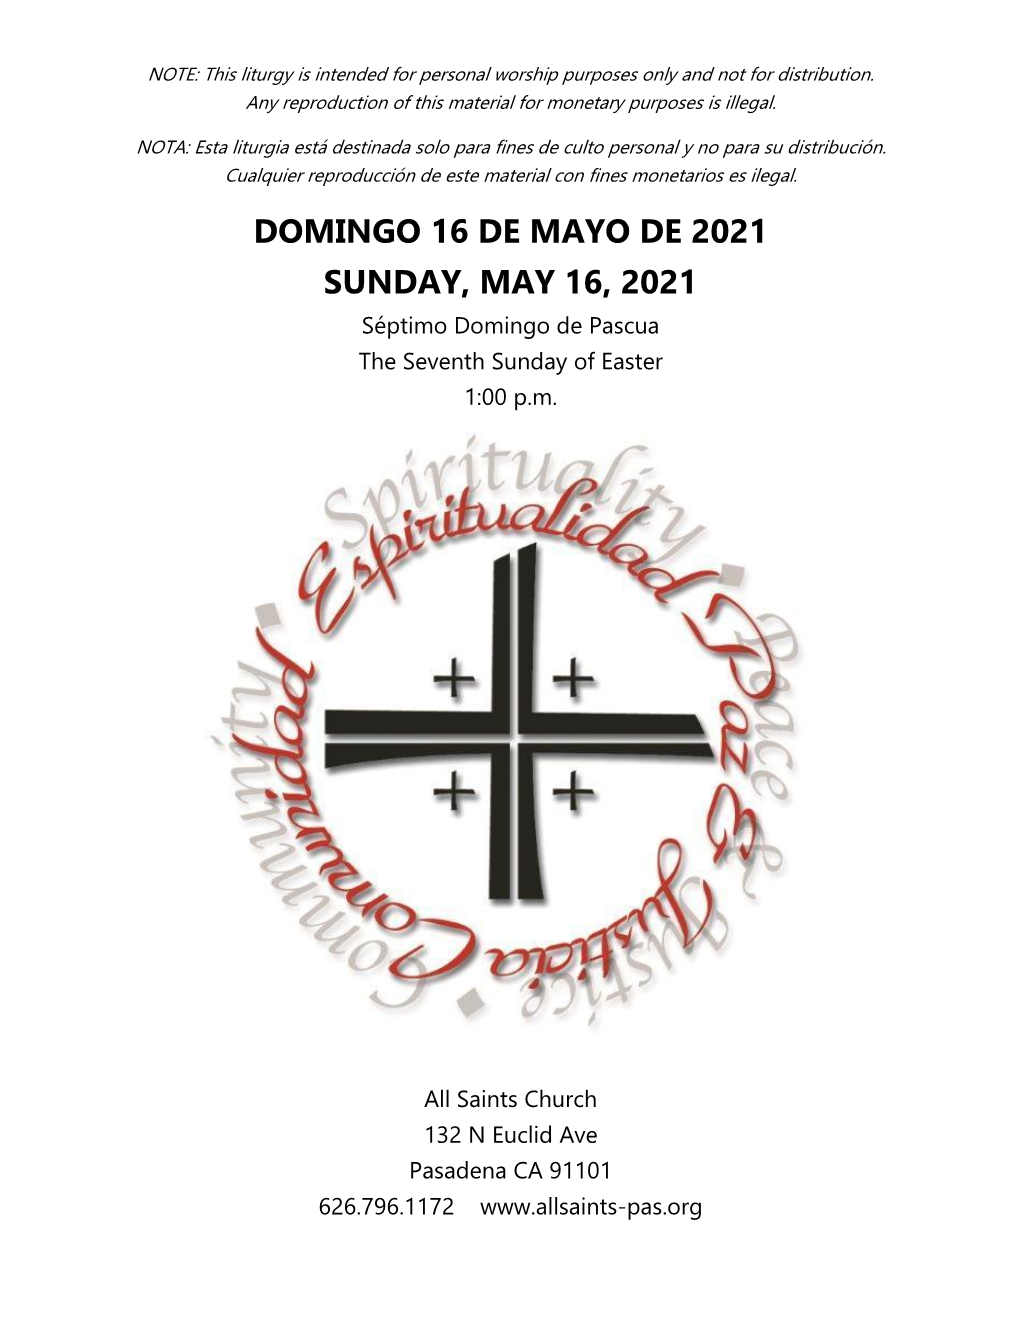 DOMINGO 16 DE MAYO DE 2021 SUNDAY, MAY 16, 2021 Séptimo Domingo De Pascua the Seventh Sunday of Easter 1:00 P.M